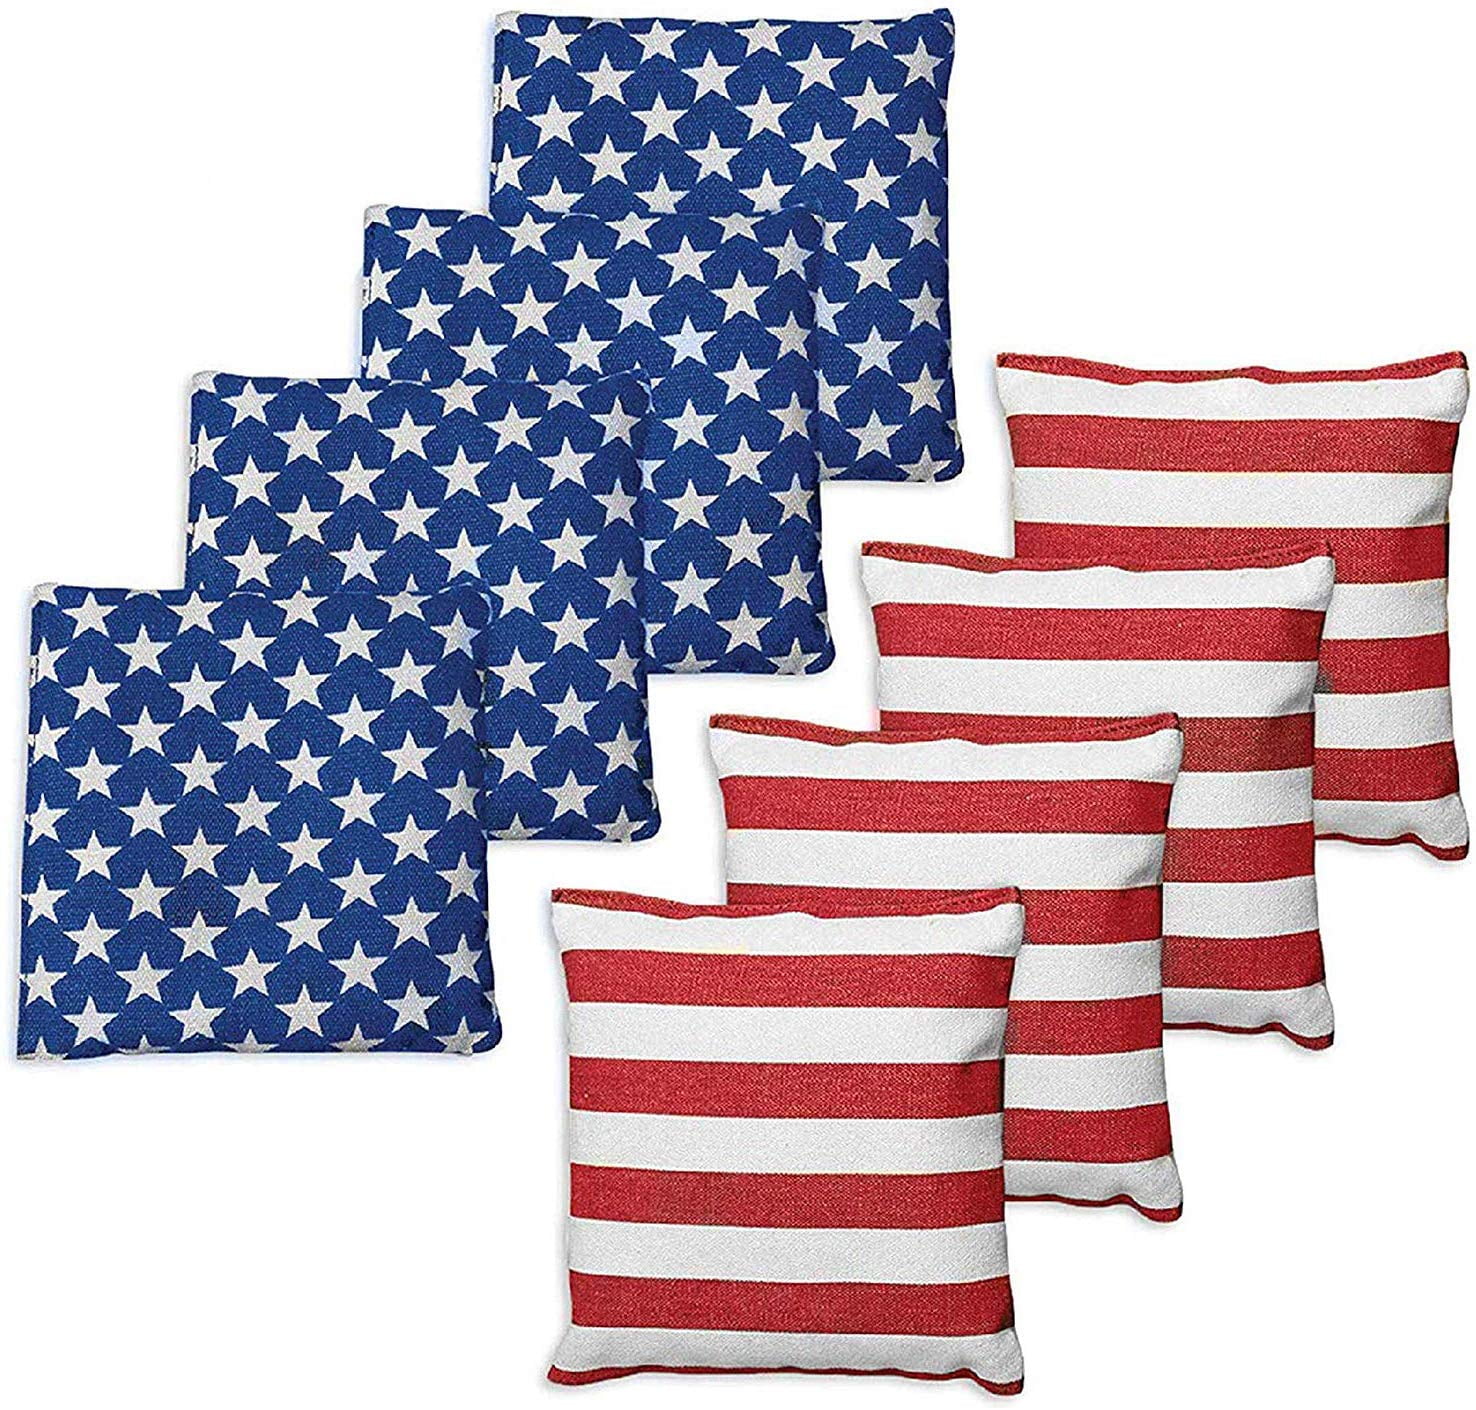 USA Patriotic American Stars n Stripes 8 ACA Regulation Cornhole Bean Bags